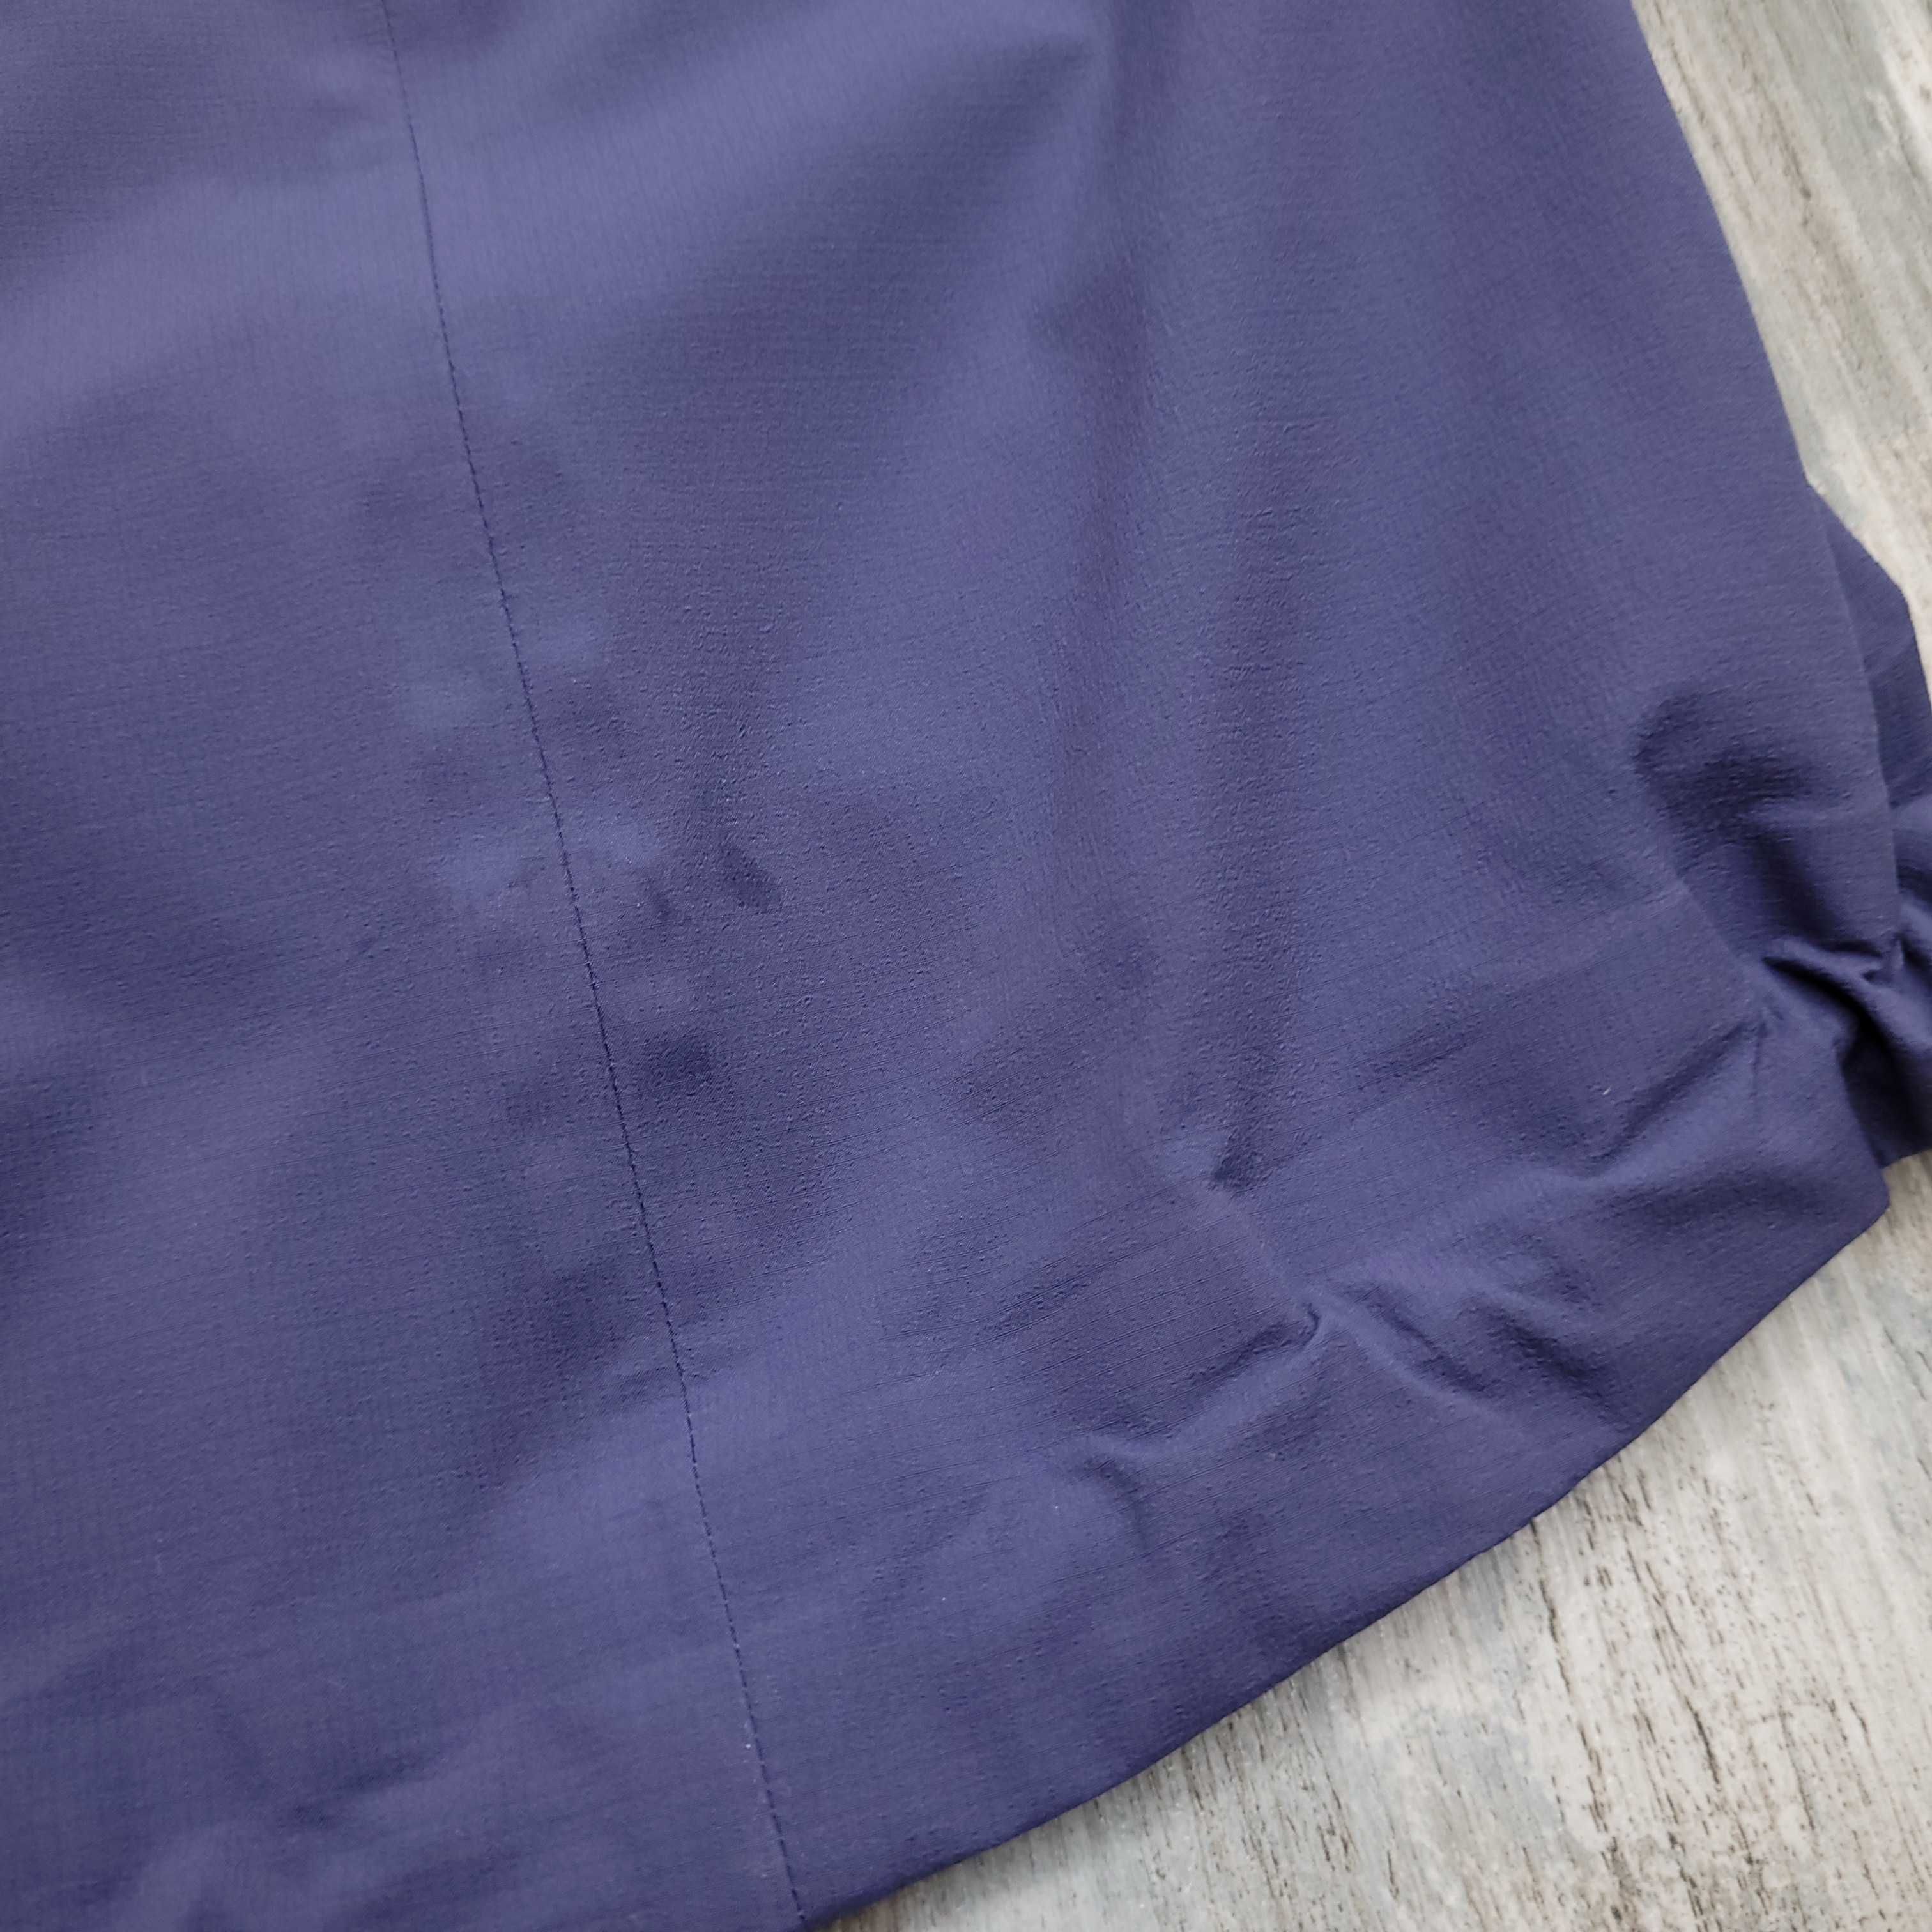 Bergans GTX Storen Jacket kurtka meska turystyczna outdoor Dermizax